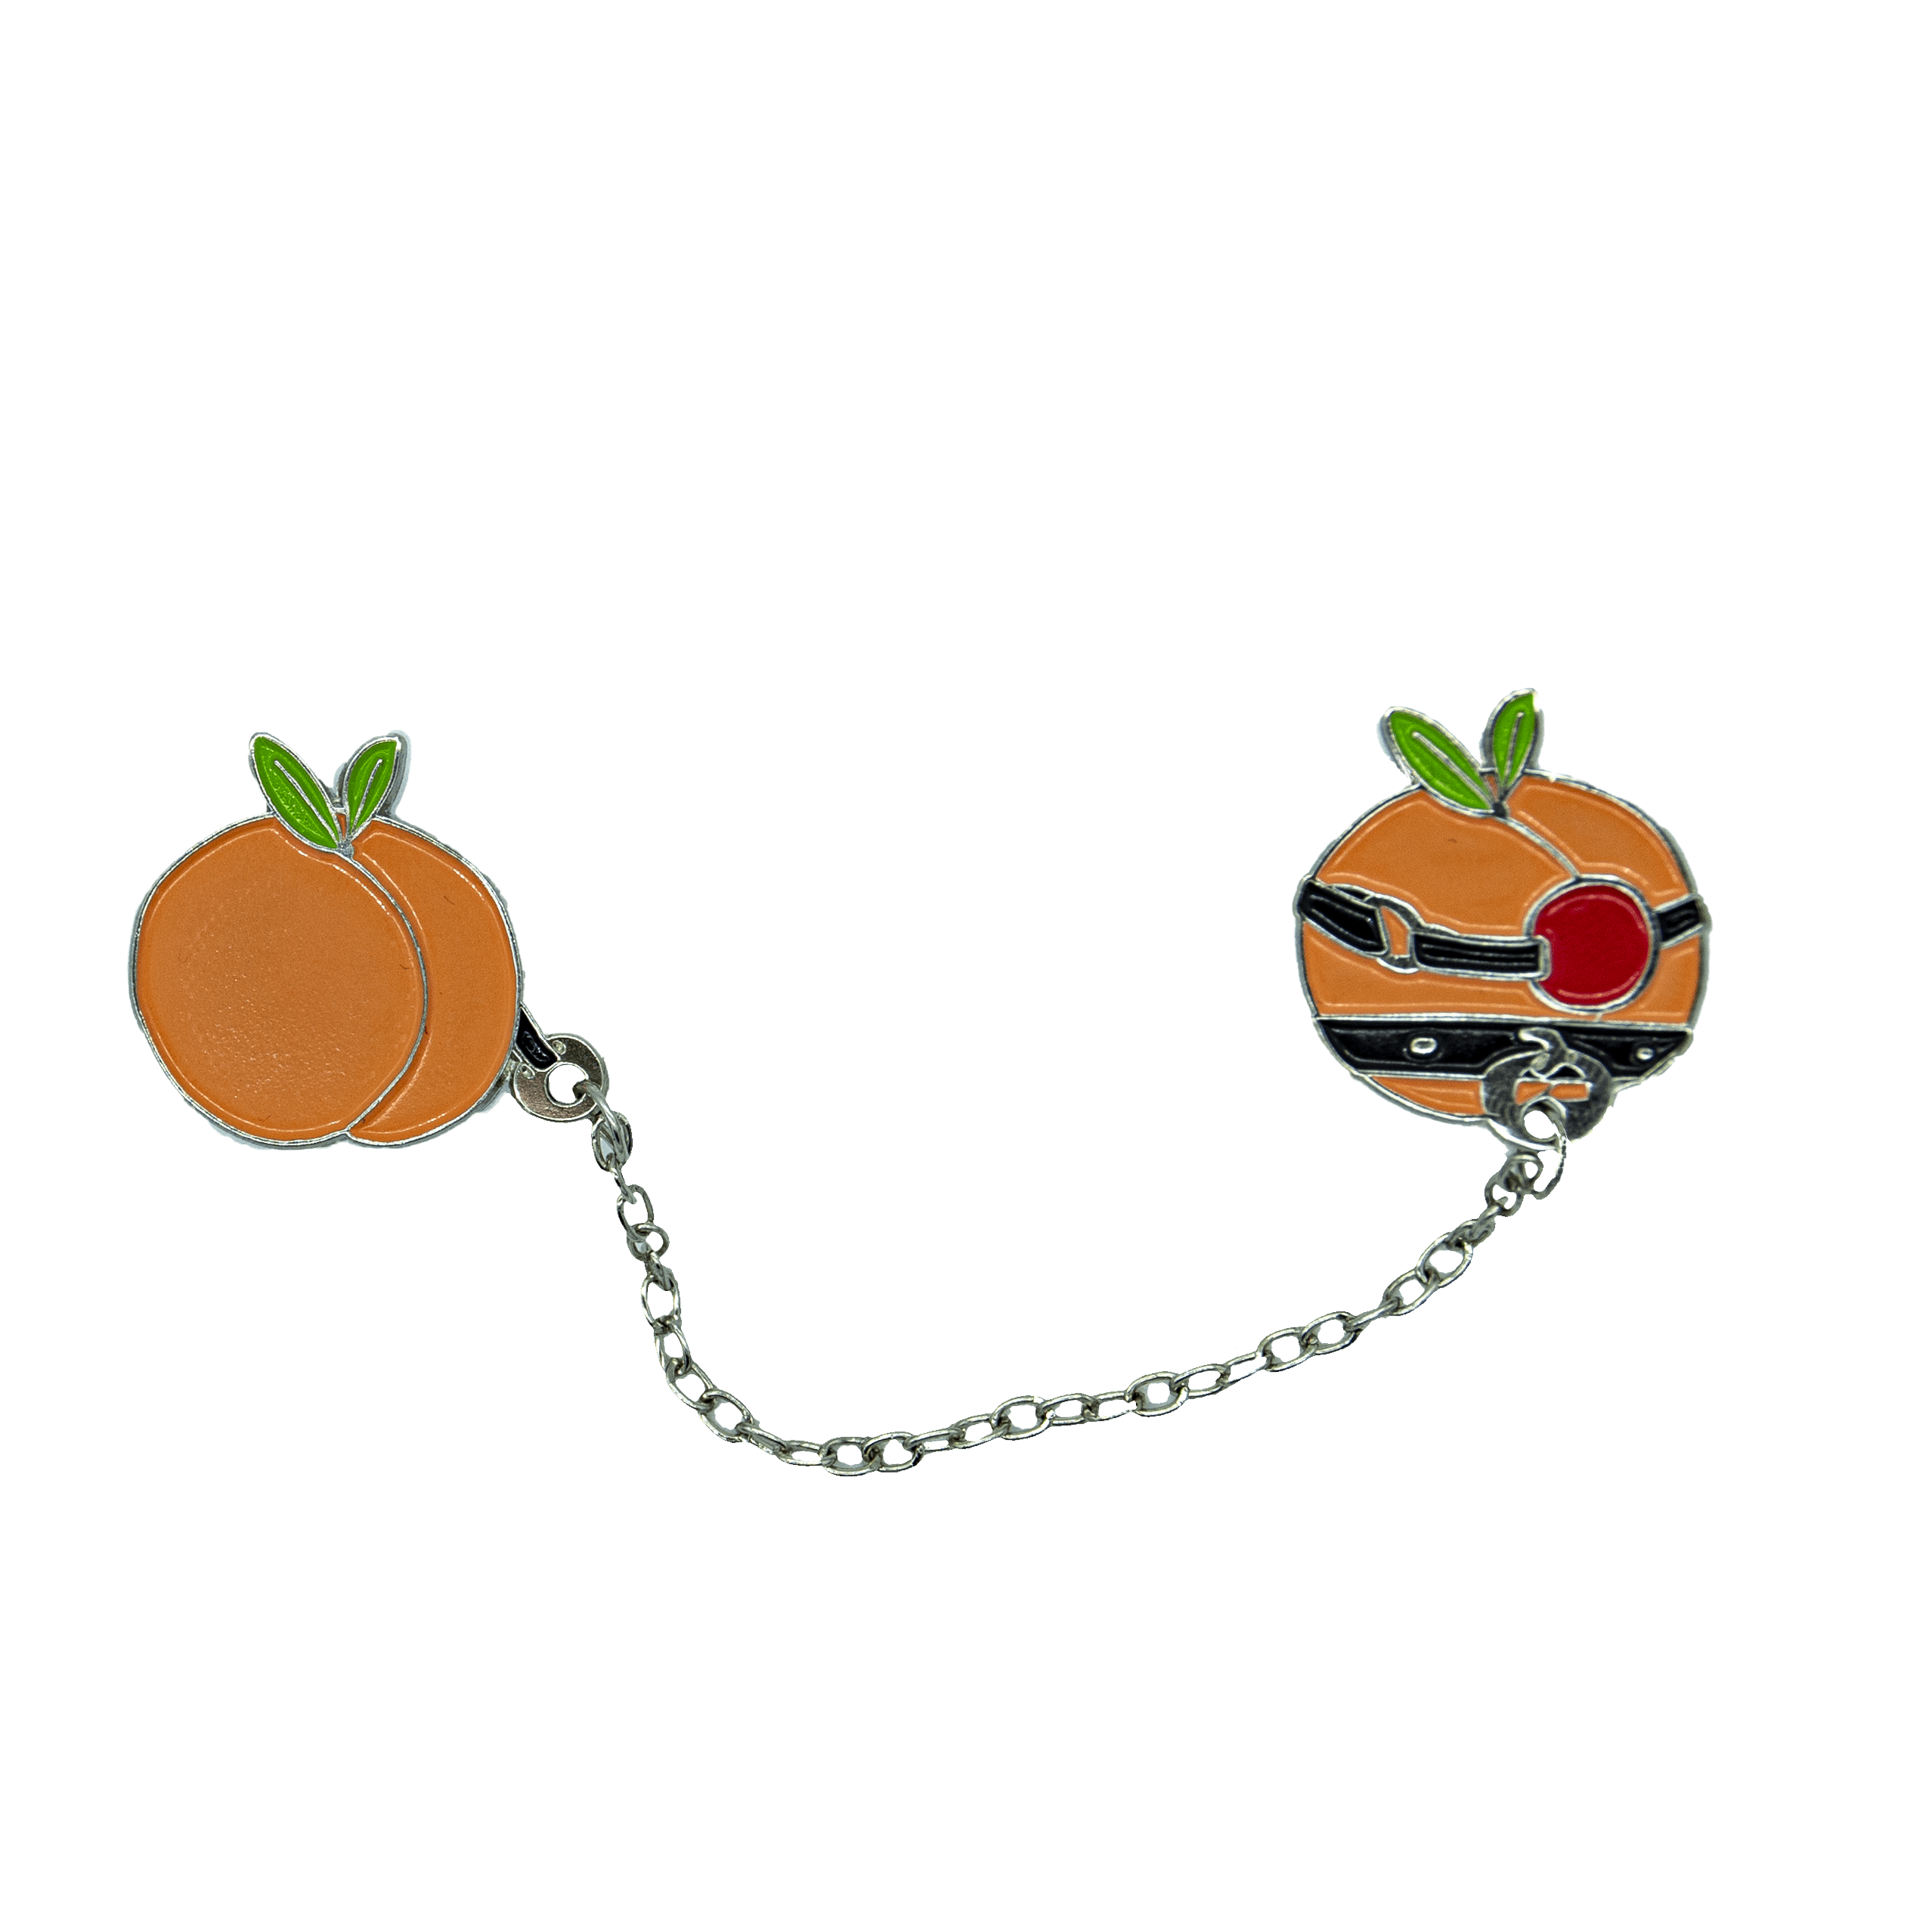 🍑 ⛓ 🍑 Forbidden Fruit Pin Set